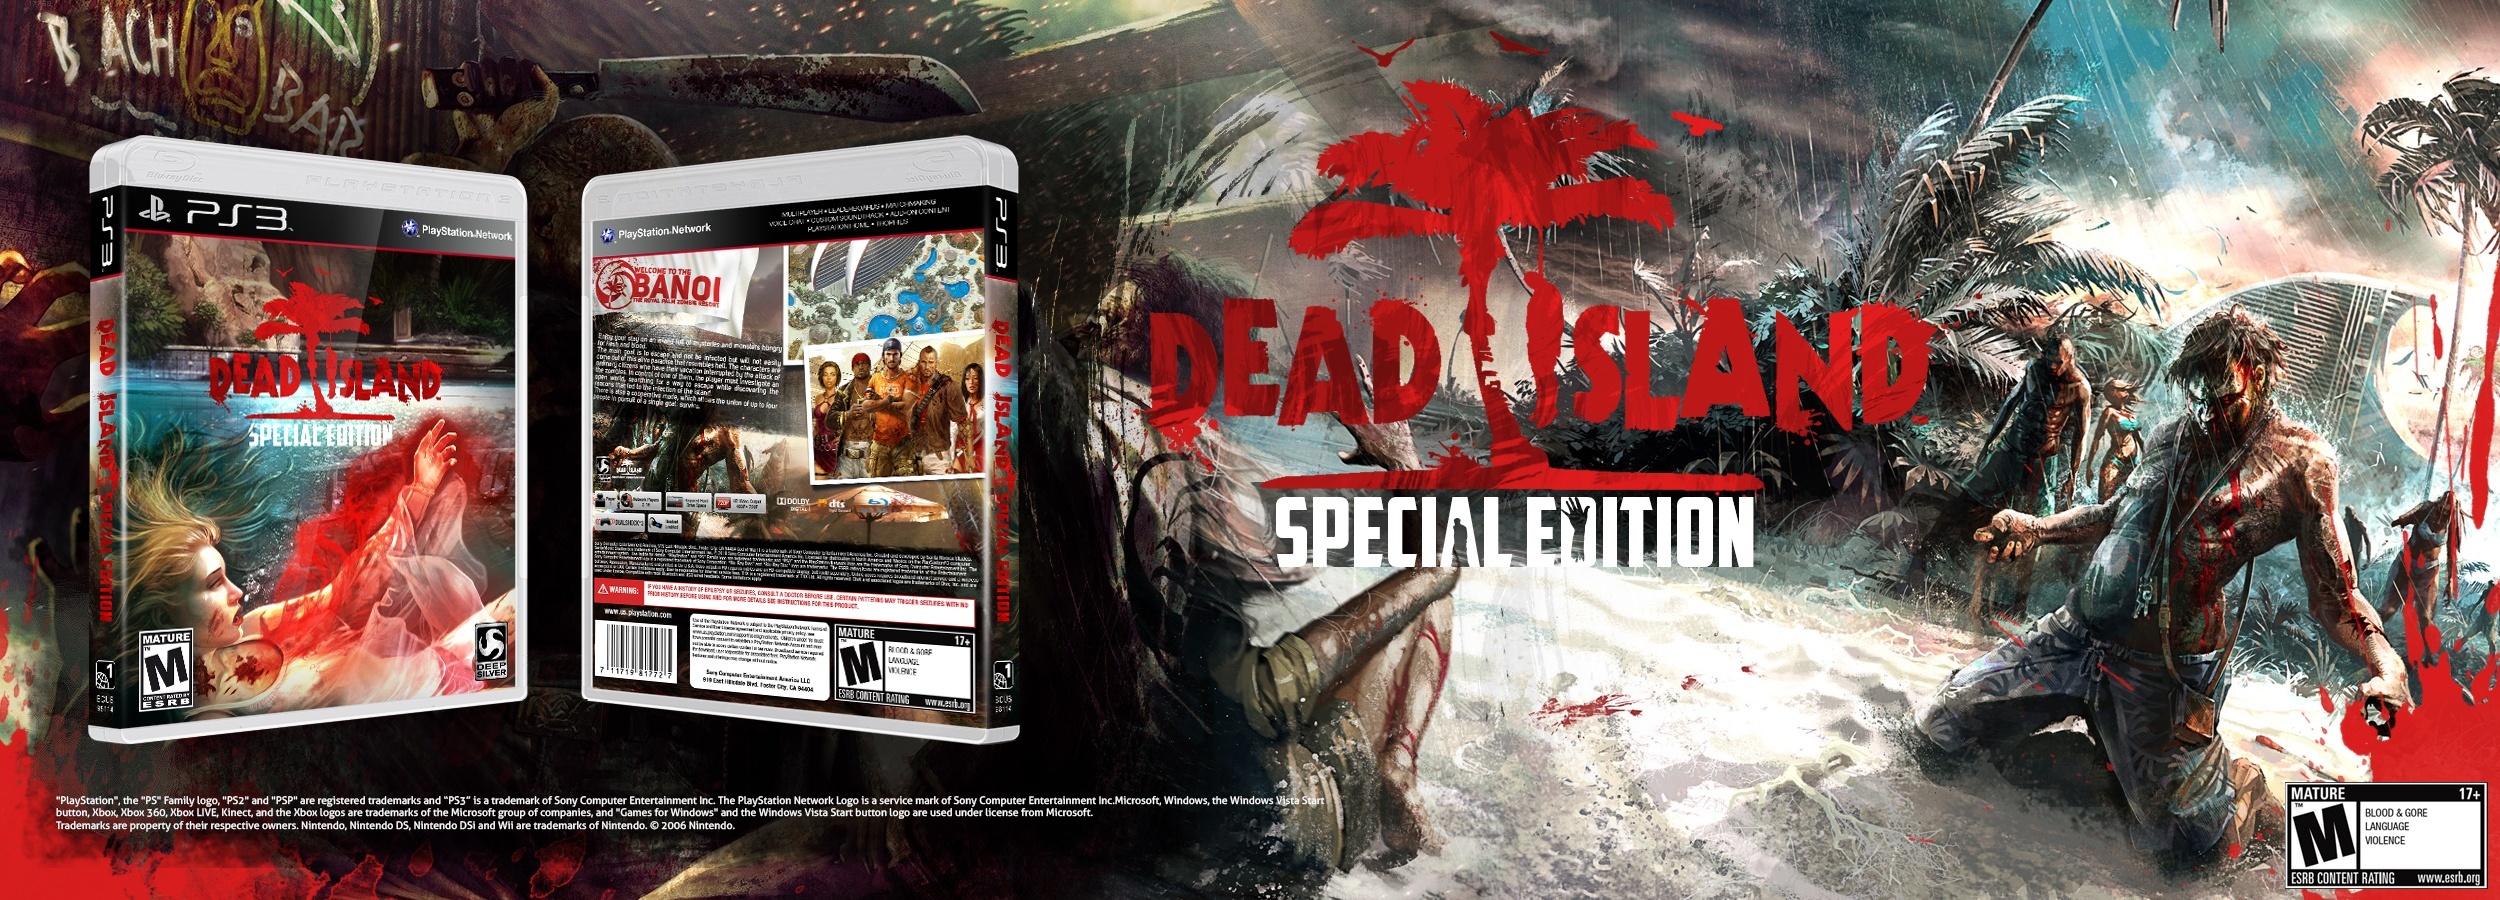 Dead Island Special Edition box cover